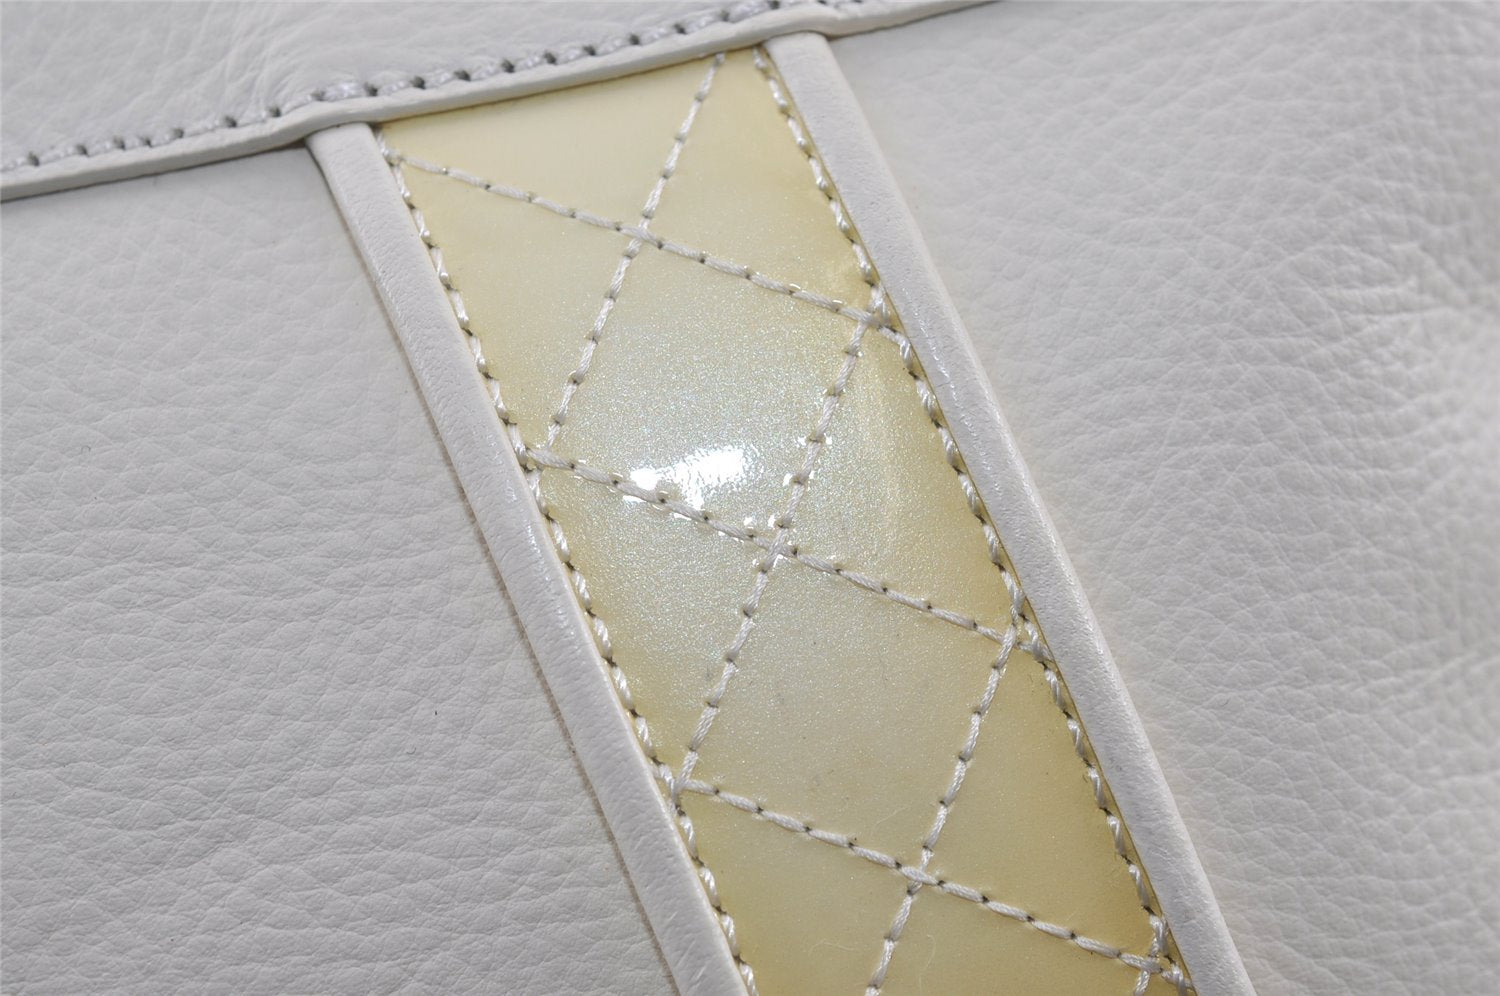 Authentic BURBERRY Vintage Leather Shoulder Hand Bag Purse White 0985J